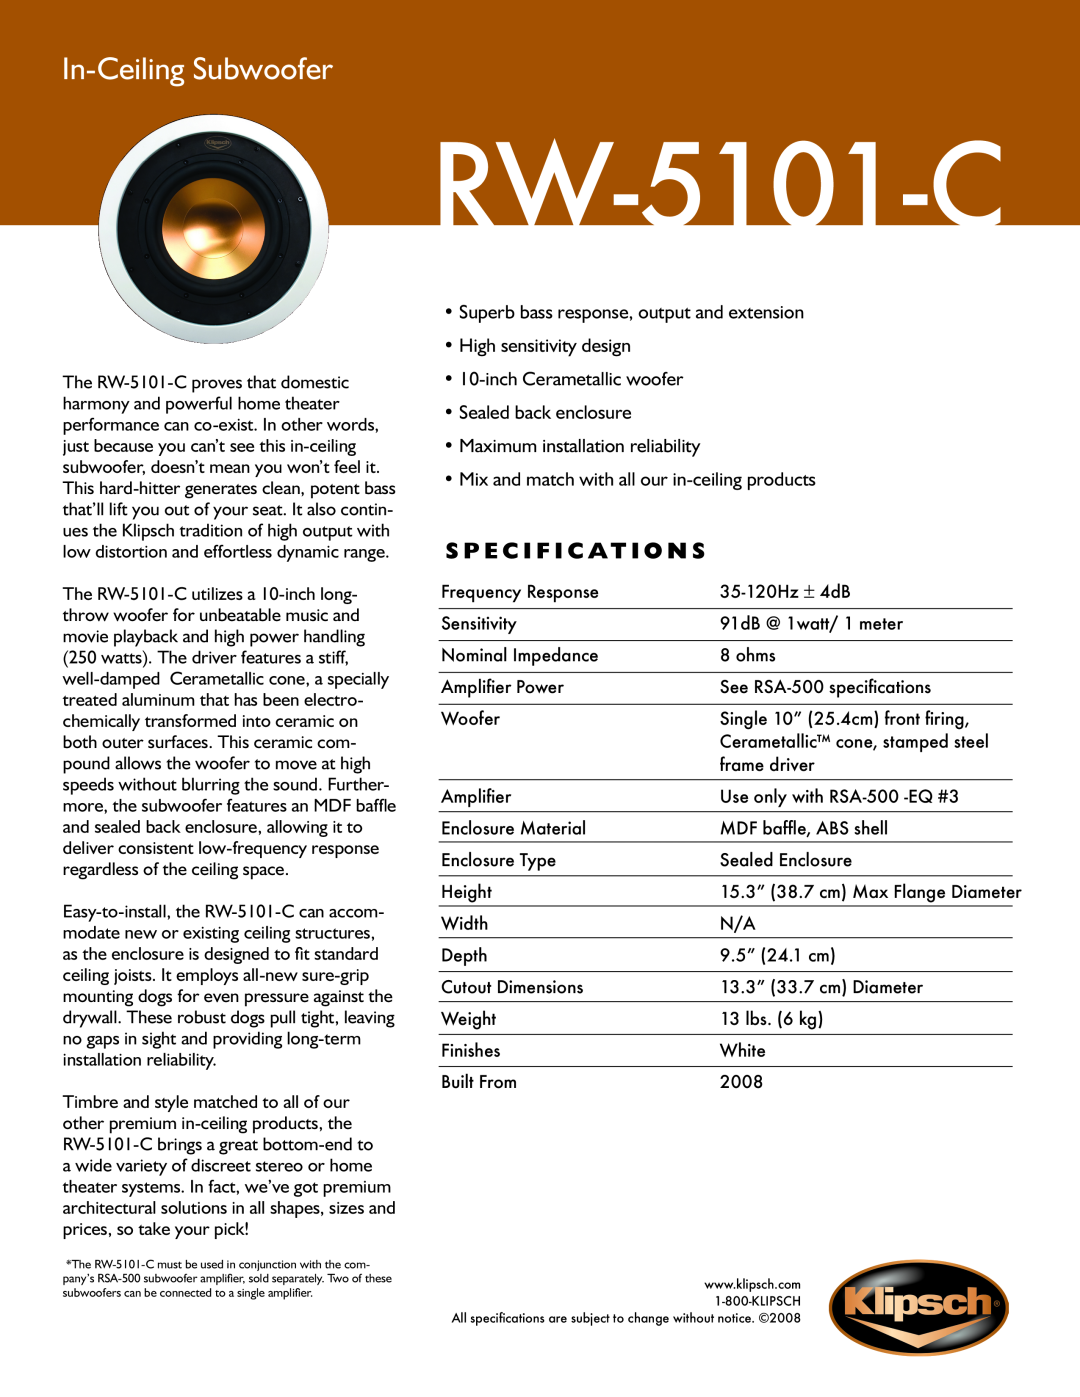 Klipsch RW-5101-C specifications In-CeilingSubwoofer, S p e c i f i c a t i o n s 